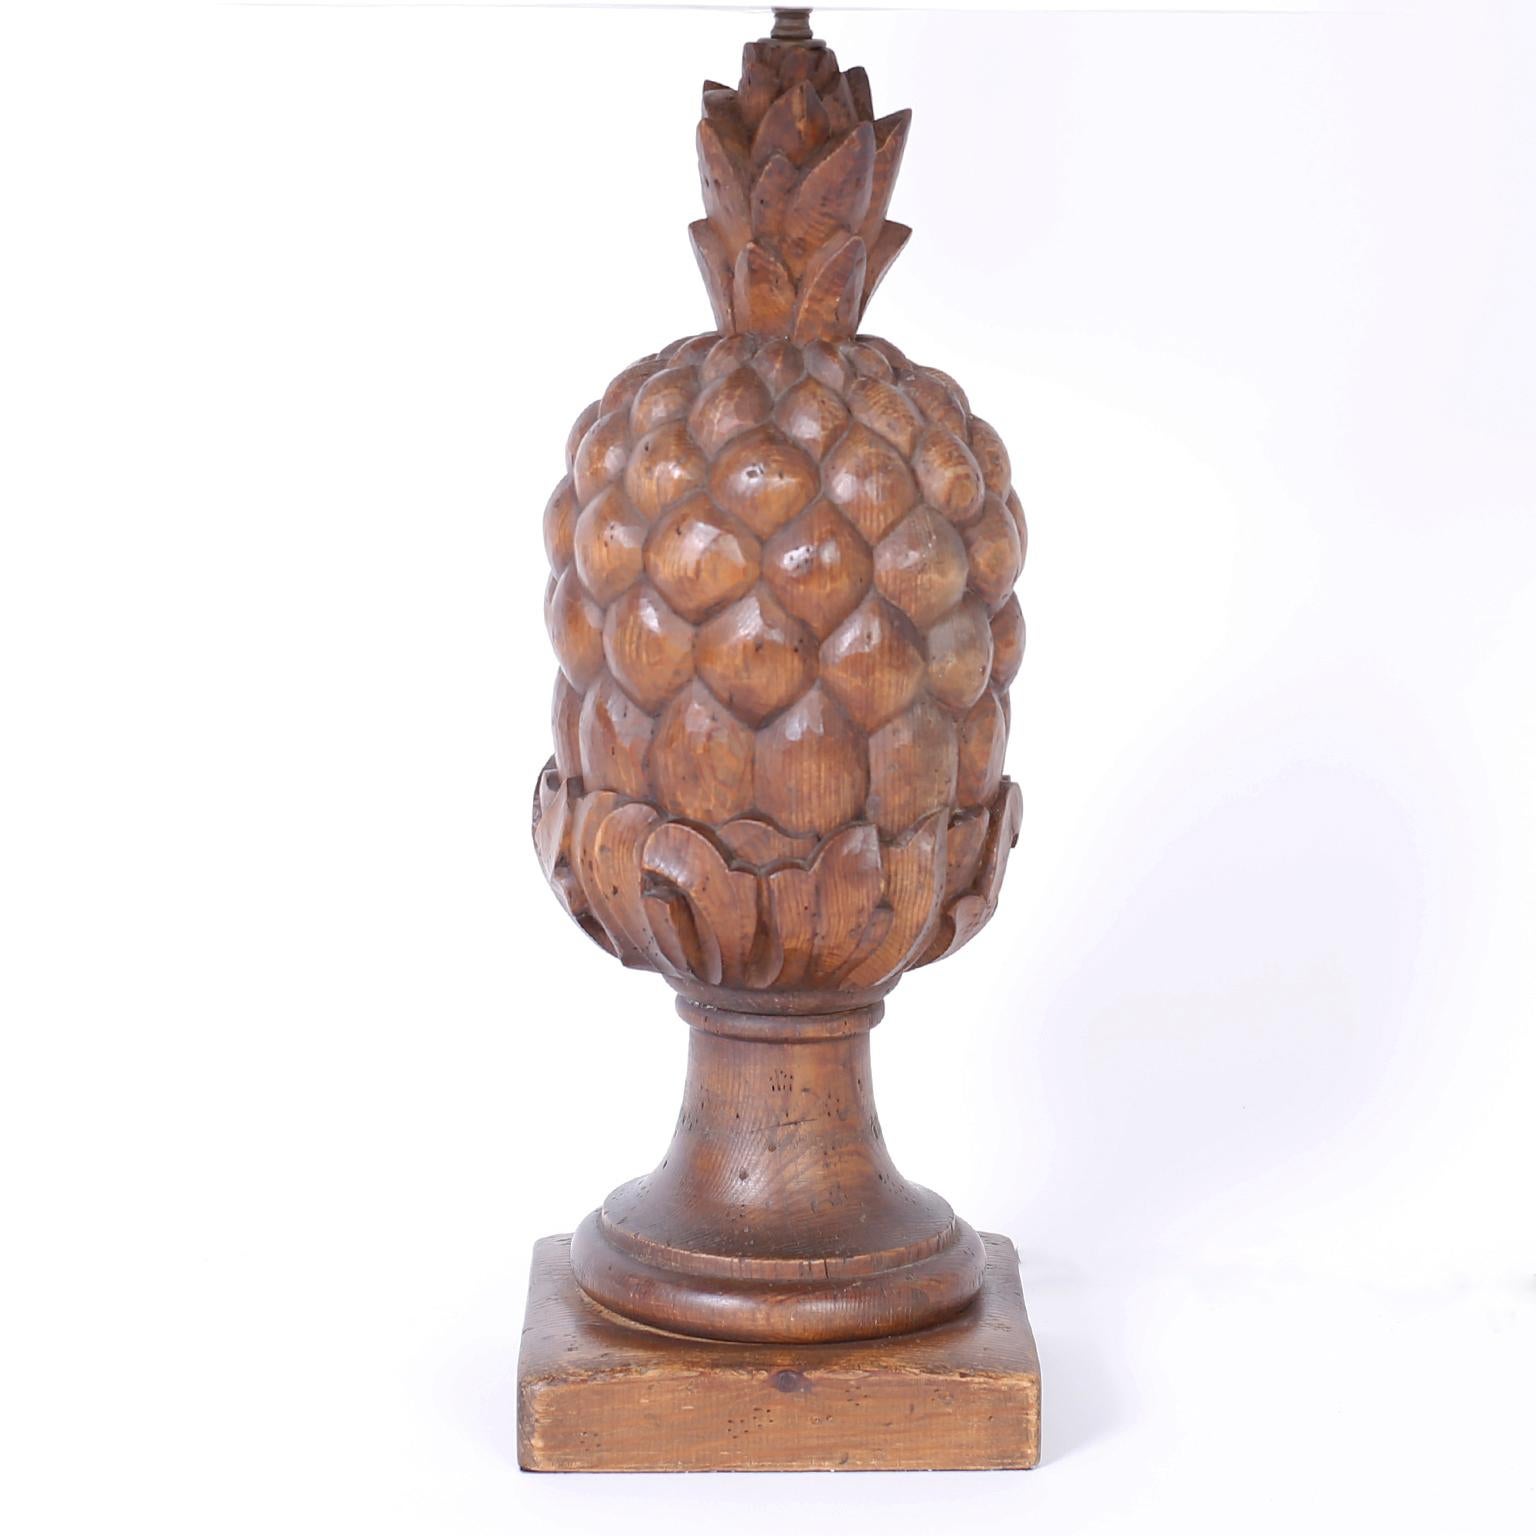 wooden pineapple lamp